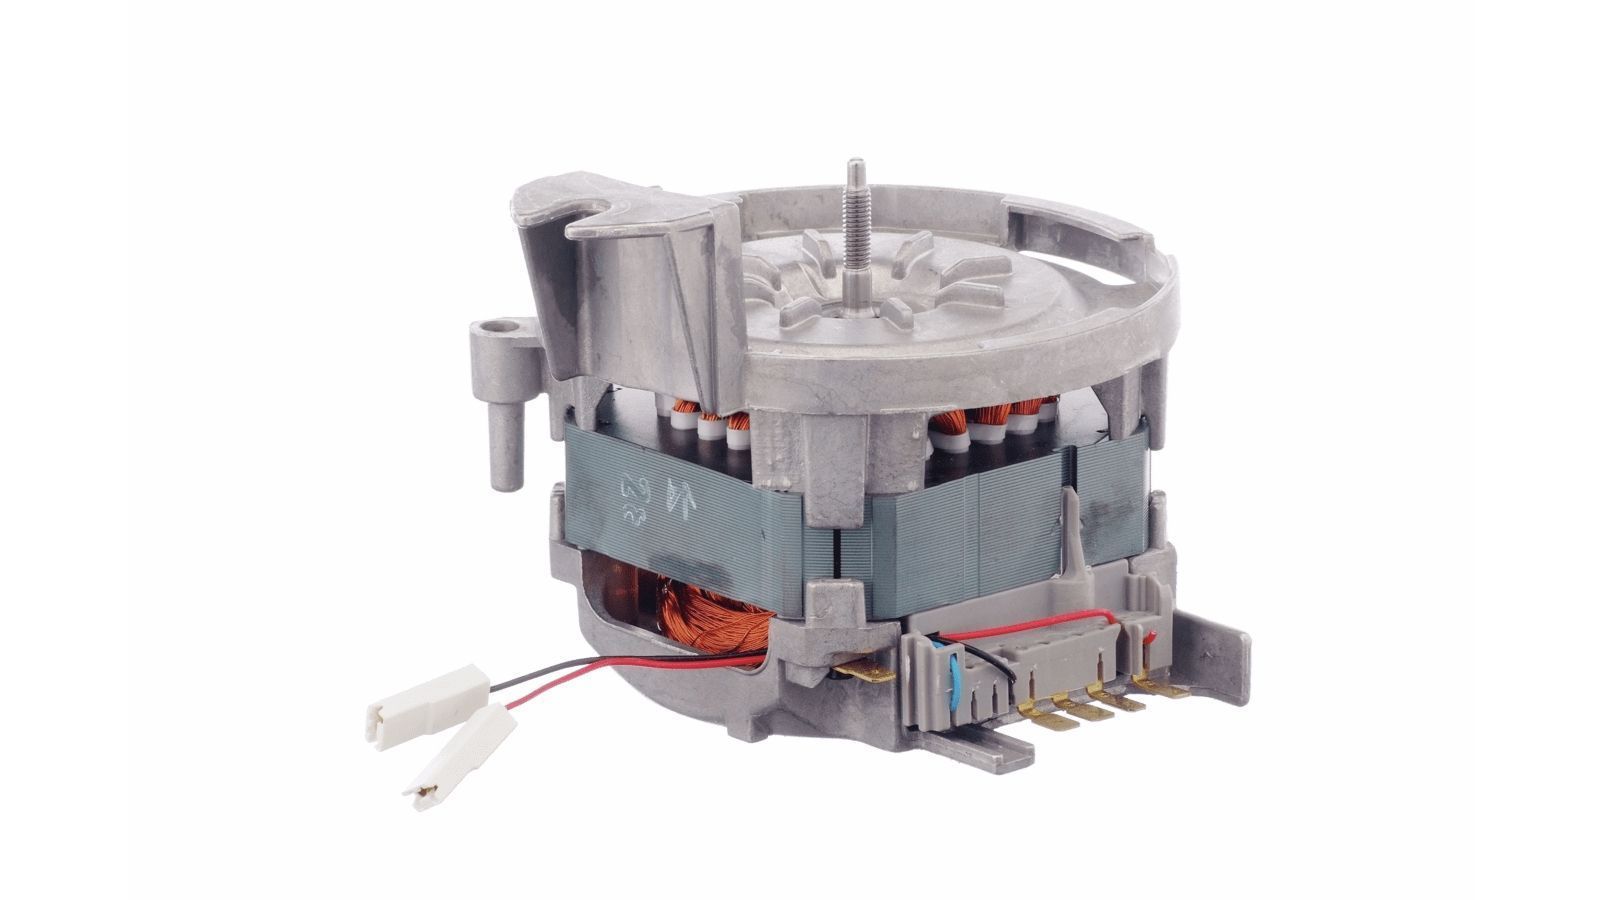 Drain Pump Motor for Bosch Siemens Dishwashers - Part nr. BSH 00267773 BSH - Bosch / Siemens